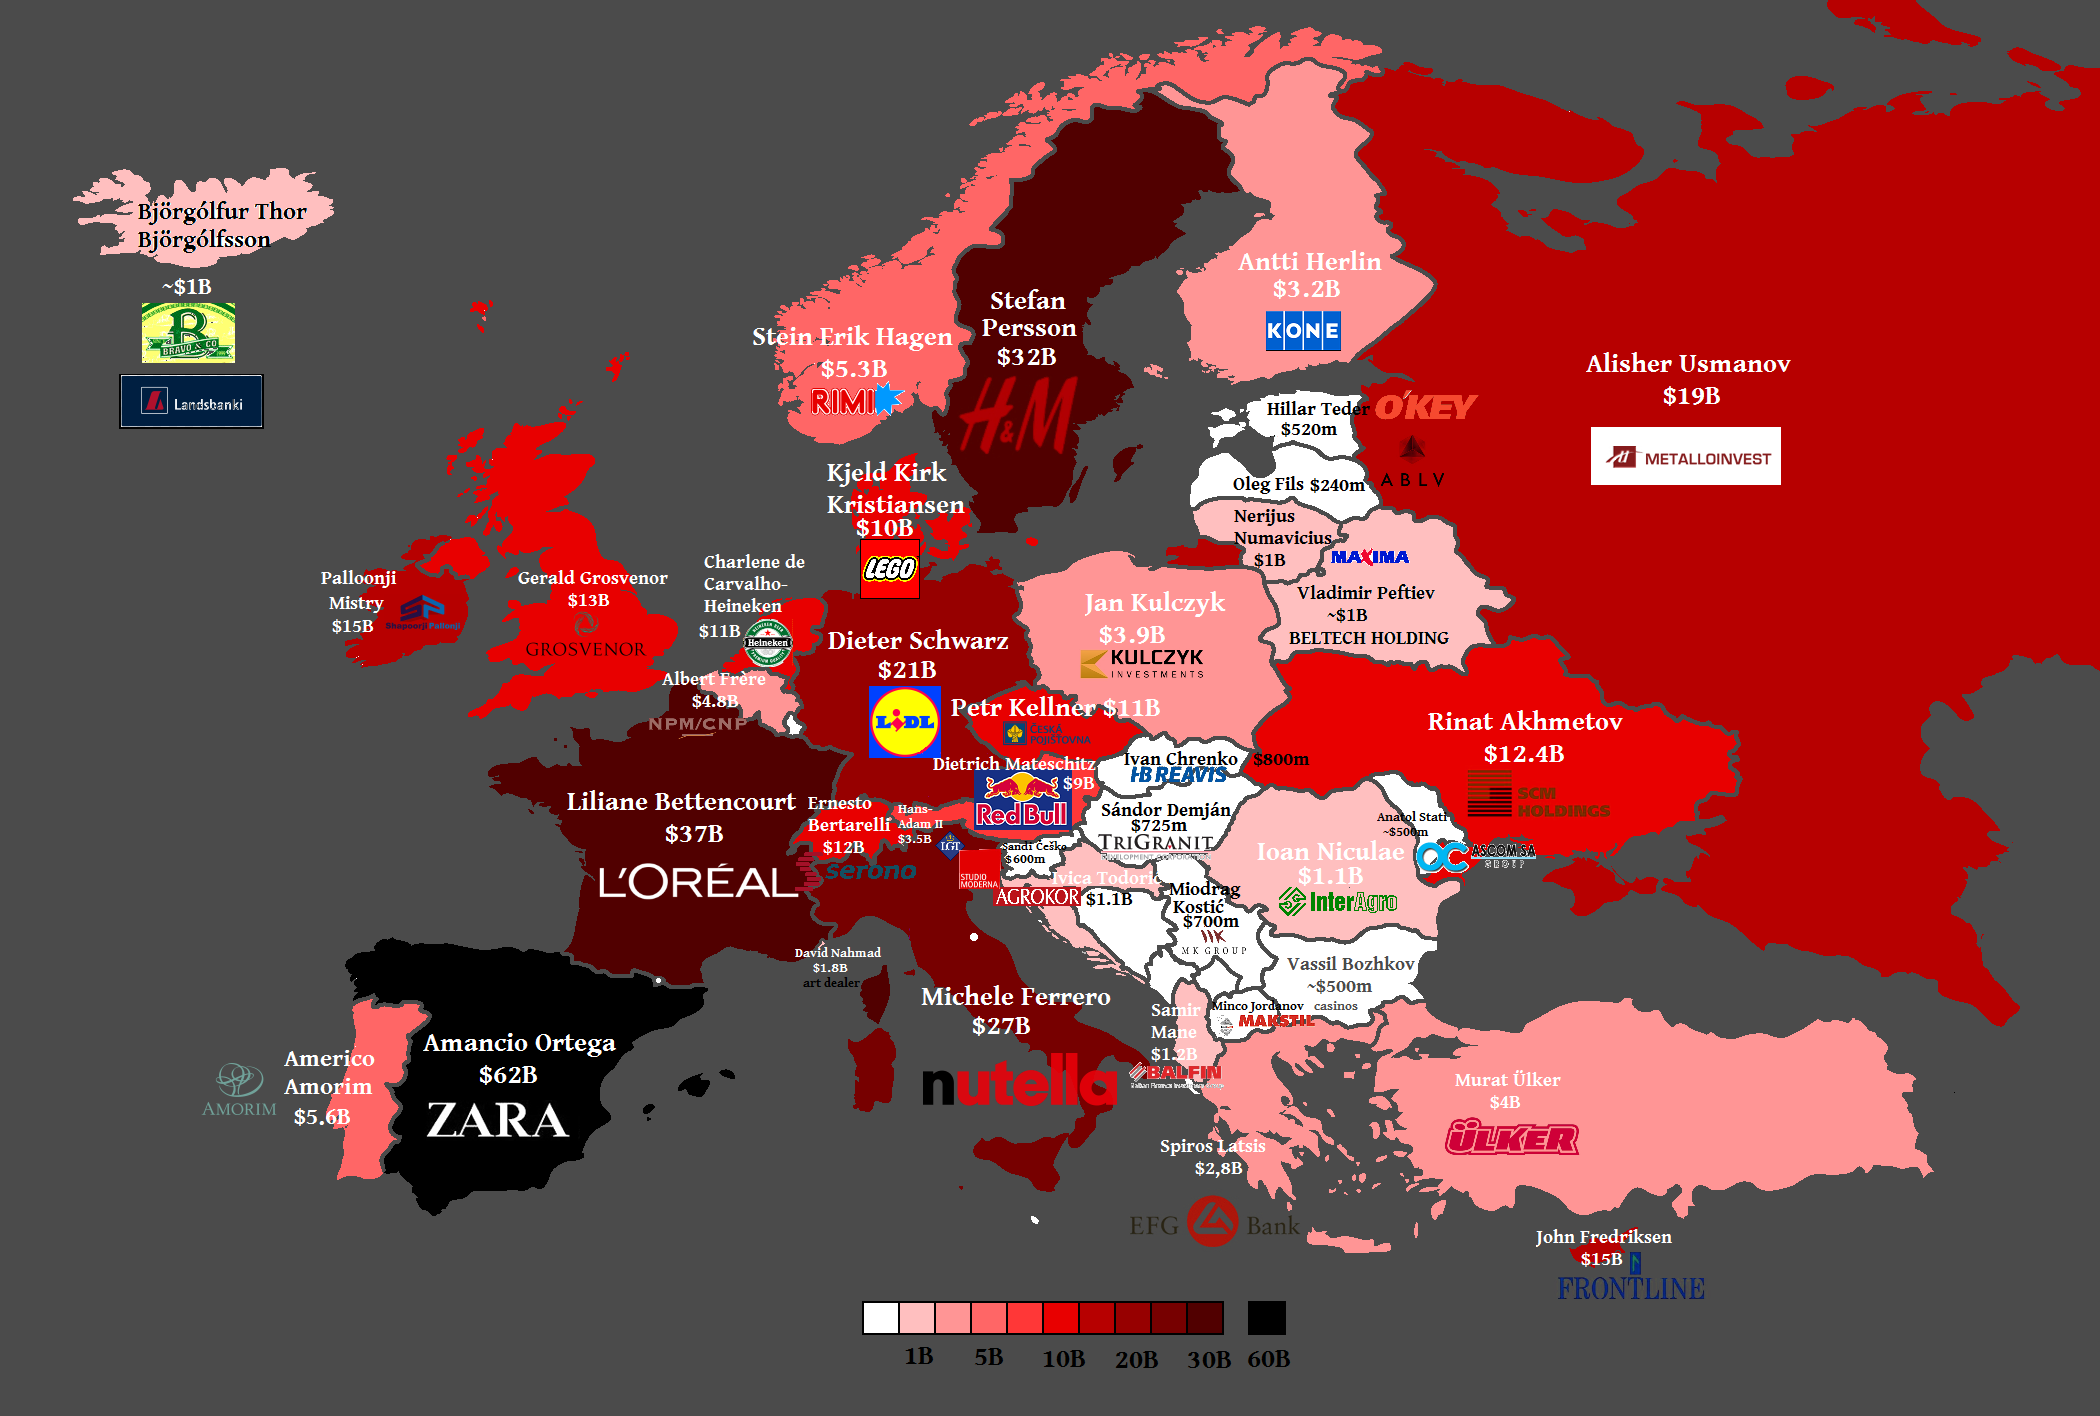 Európa országainak leggazdagabbjai